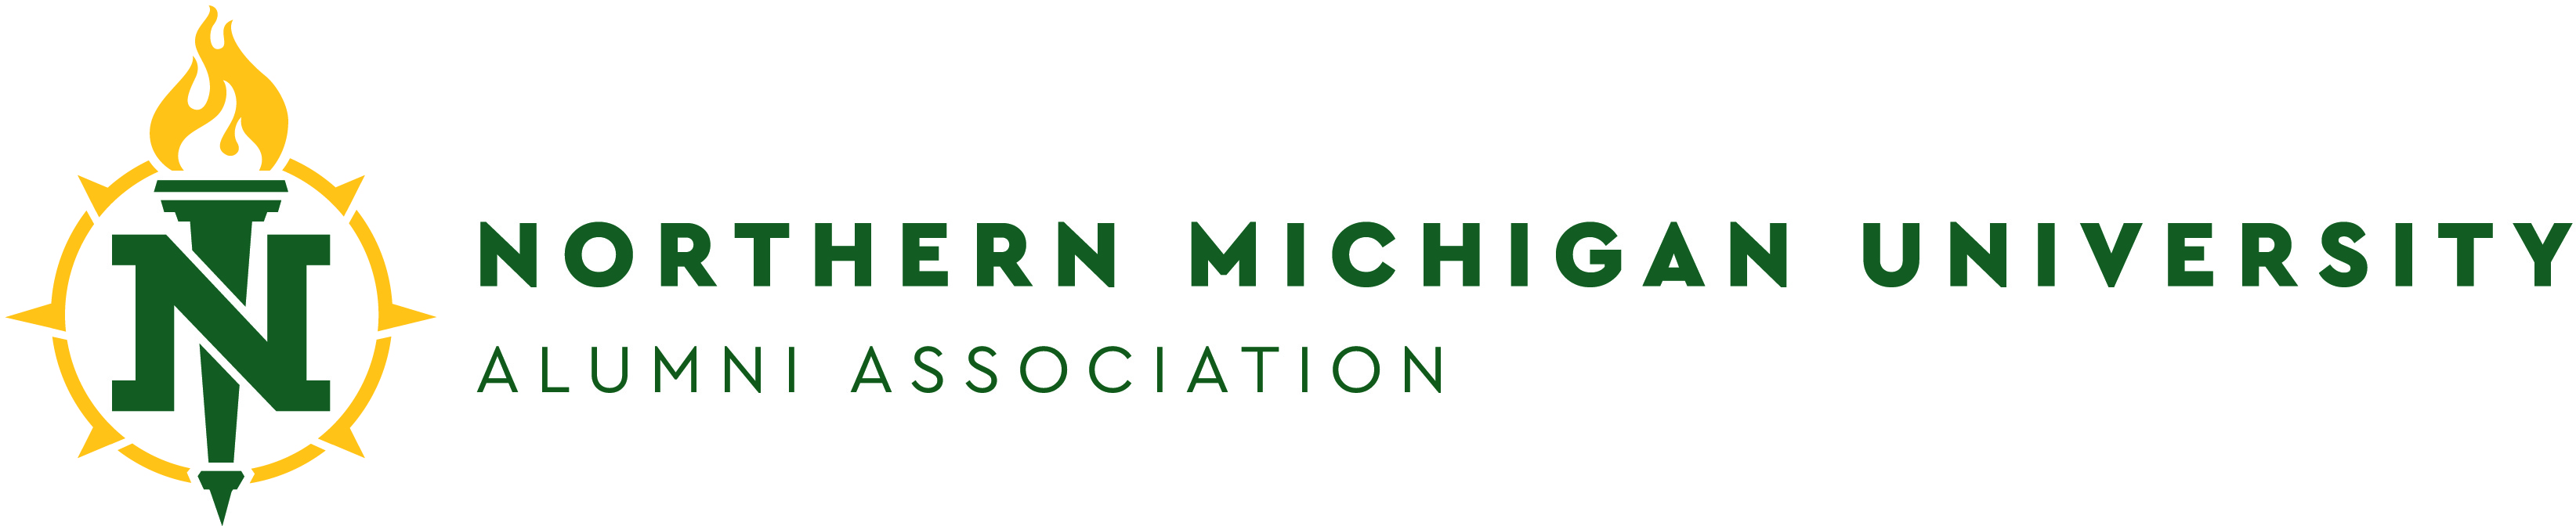 Northern Michigan University Alumni Association